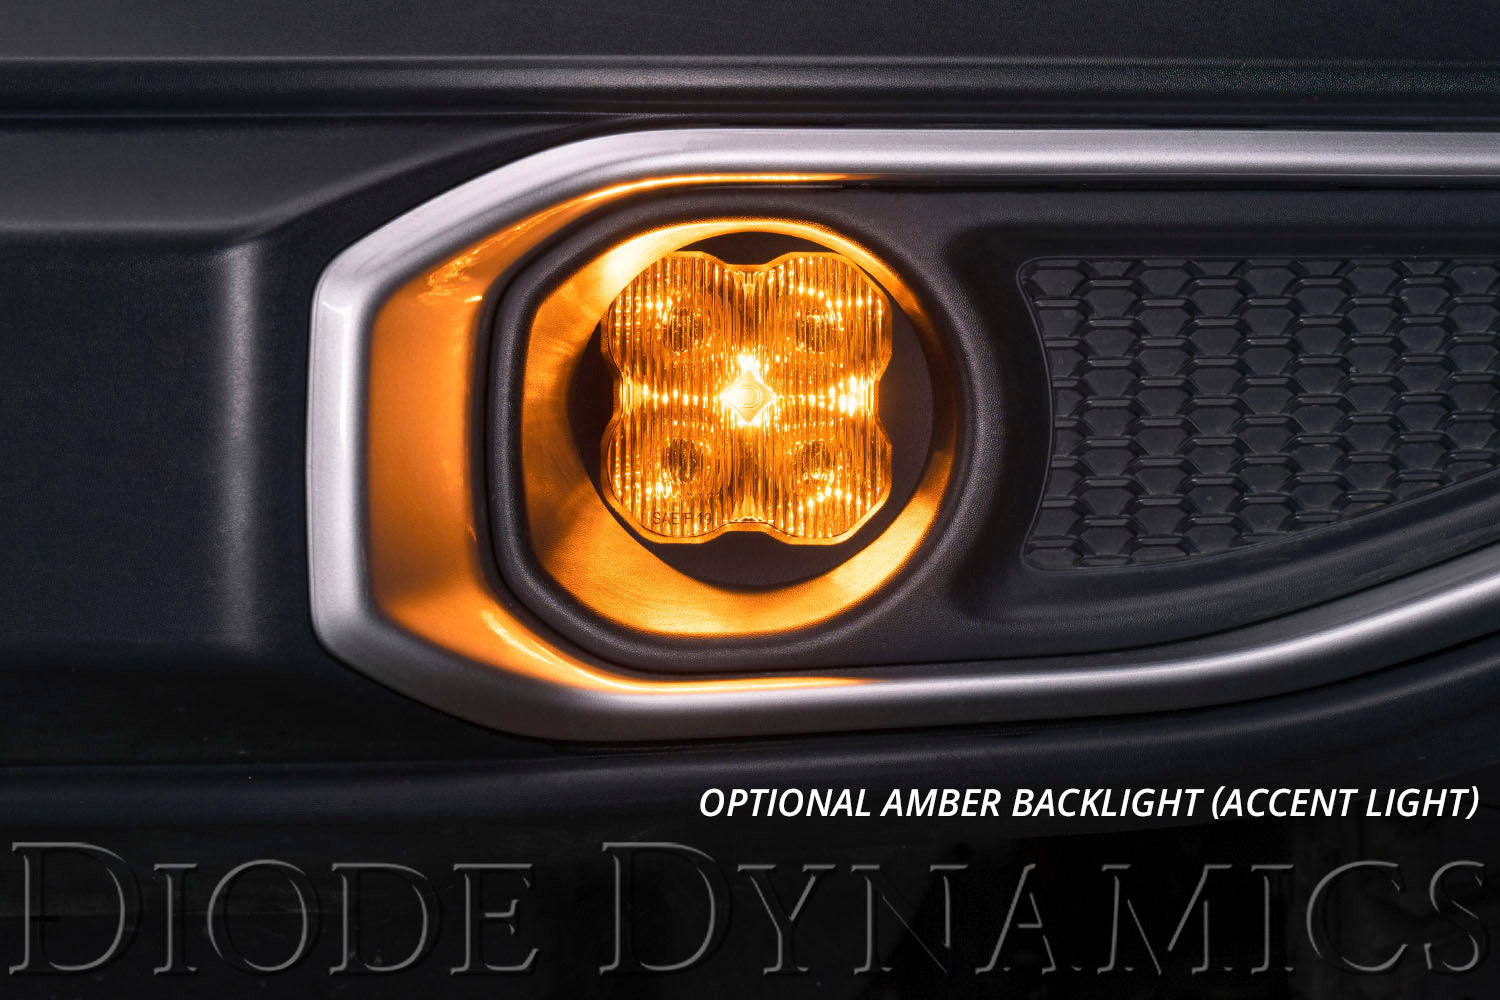 SS3 LED Fog Light Kit for 2011-2013 Jeep Grand Cherokee Yellow SAE Fog Sport Diode Dynamics